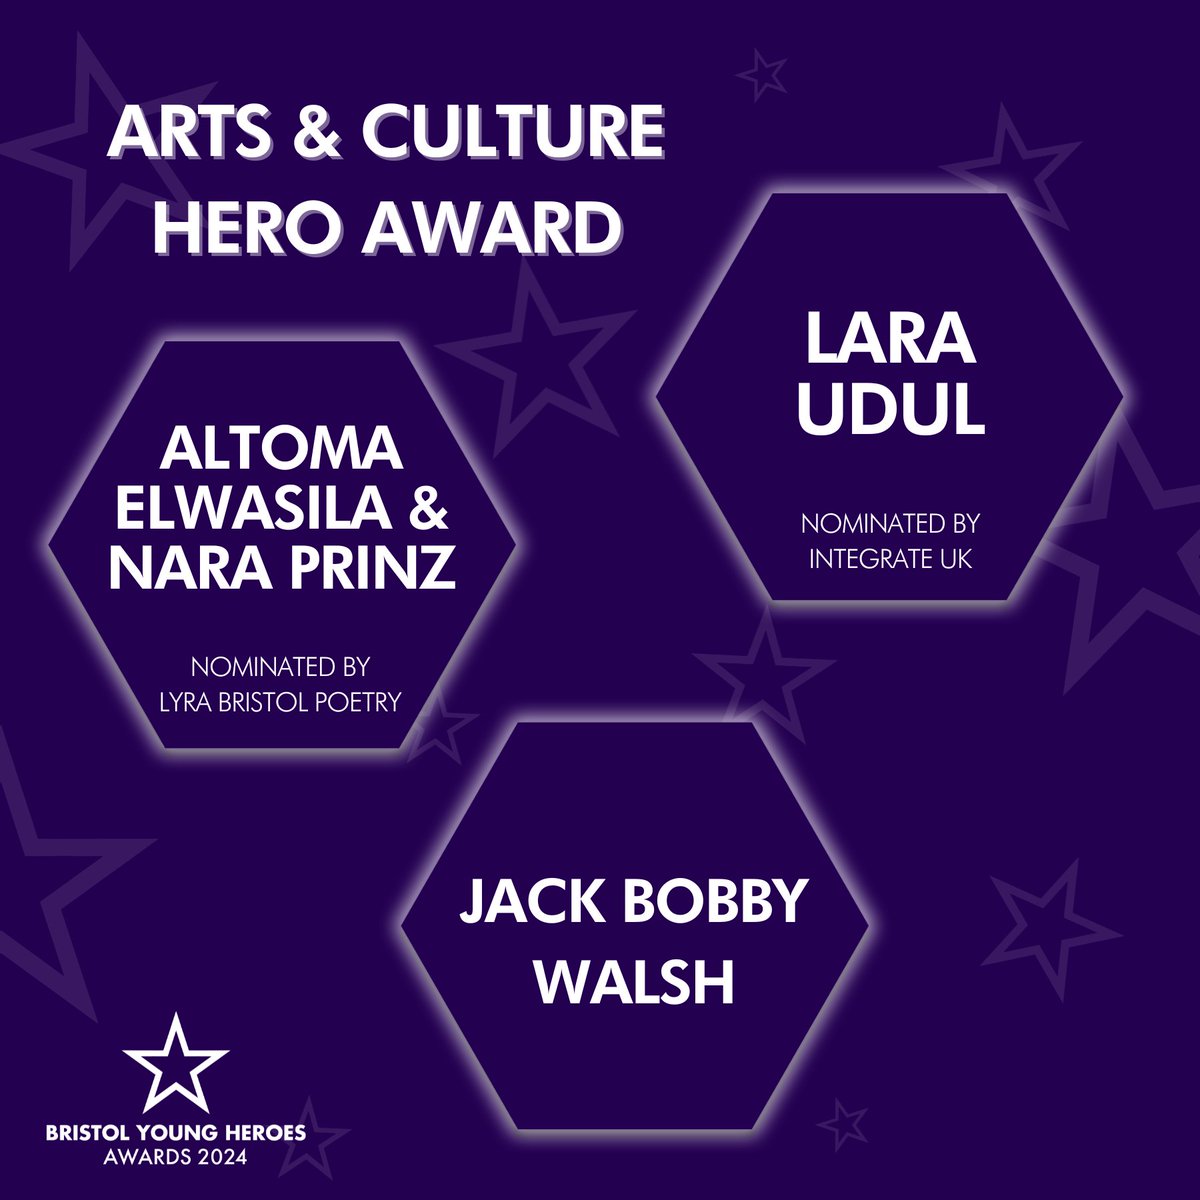 ✨Arts & Culture Hero Award✨ Congratulations to the finalists for the Arts & Culture Hero Award for the Bristol Young Hero Awards 2024! 🌟 Altoma Elwasila & Nara Prinz 🌟 Lara Udul 🌟Jack Bobby Walsh Good luck 🤞 #empoweringpeople #BYHA #BYHA2024 #artshero #artsandculture